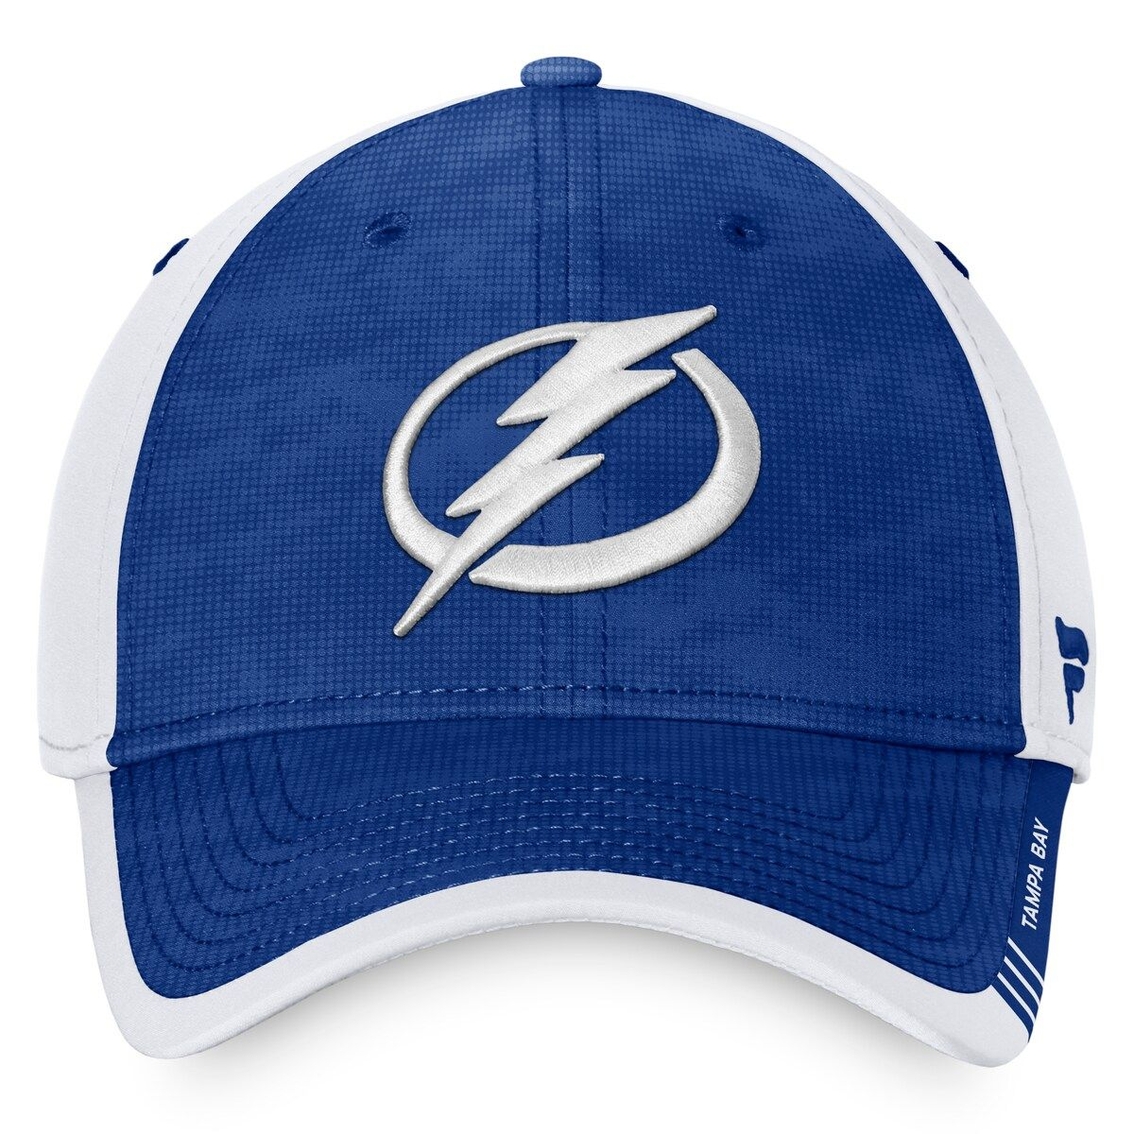 Fanatics Branded Men's Blue/White Tampa Bay Lightning Authentic Pro Rink Camo Flex Hat - Image 3 of 4